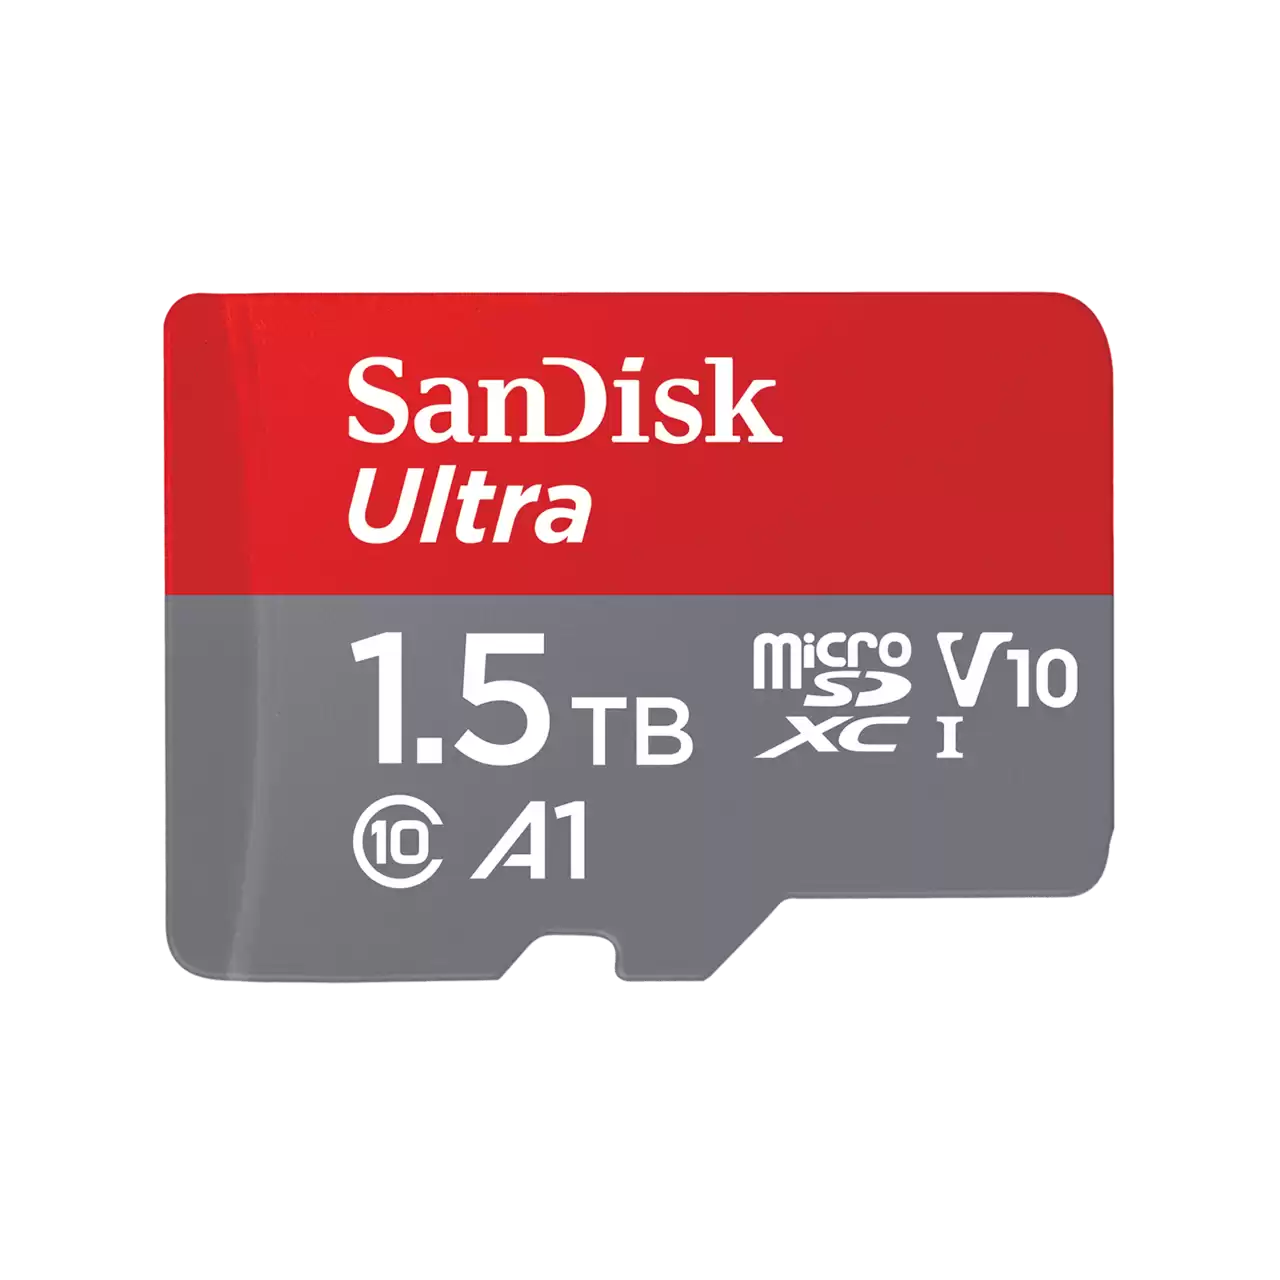 SanDisk Ultra microSDXC UHS-I Card - 1.5TB